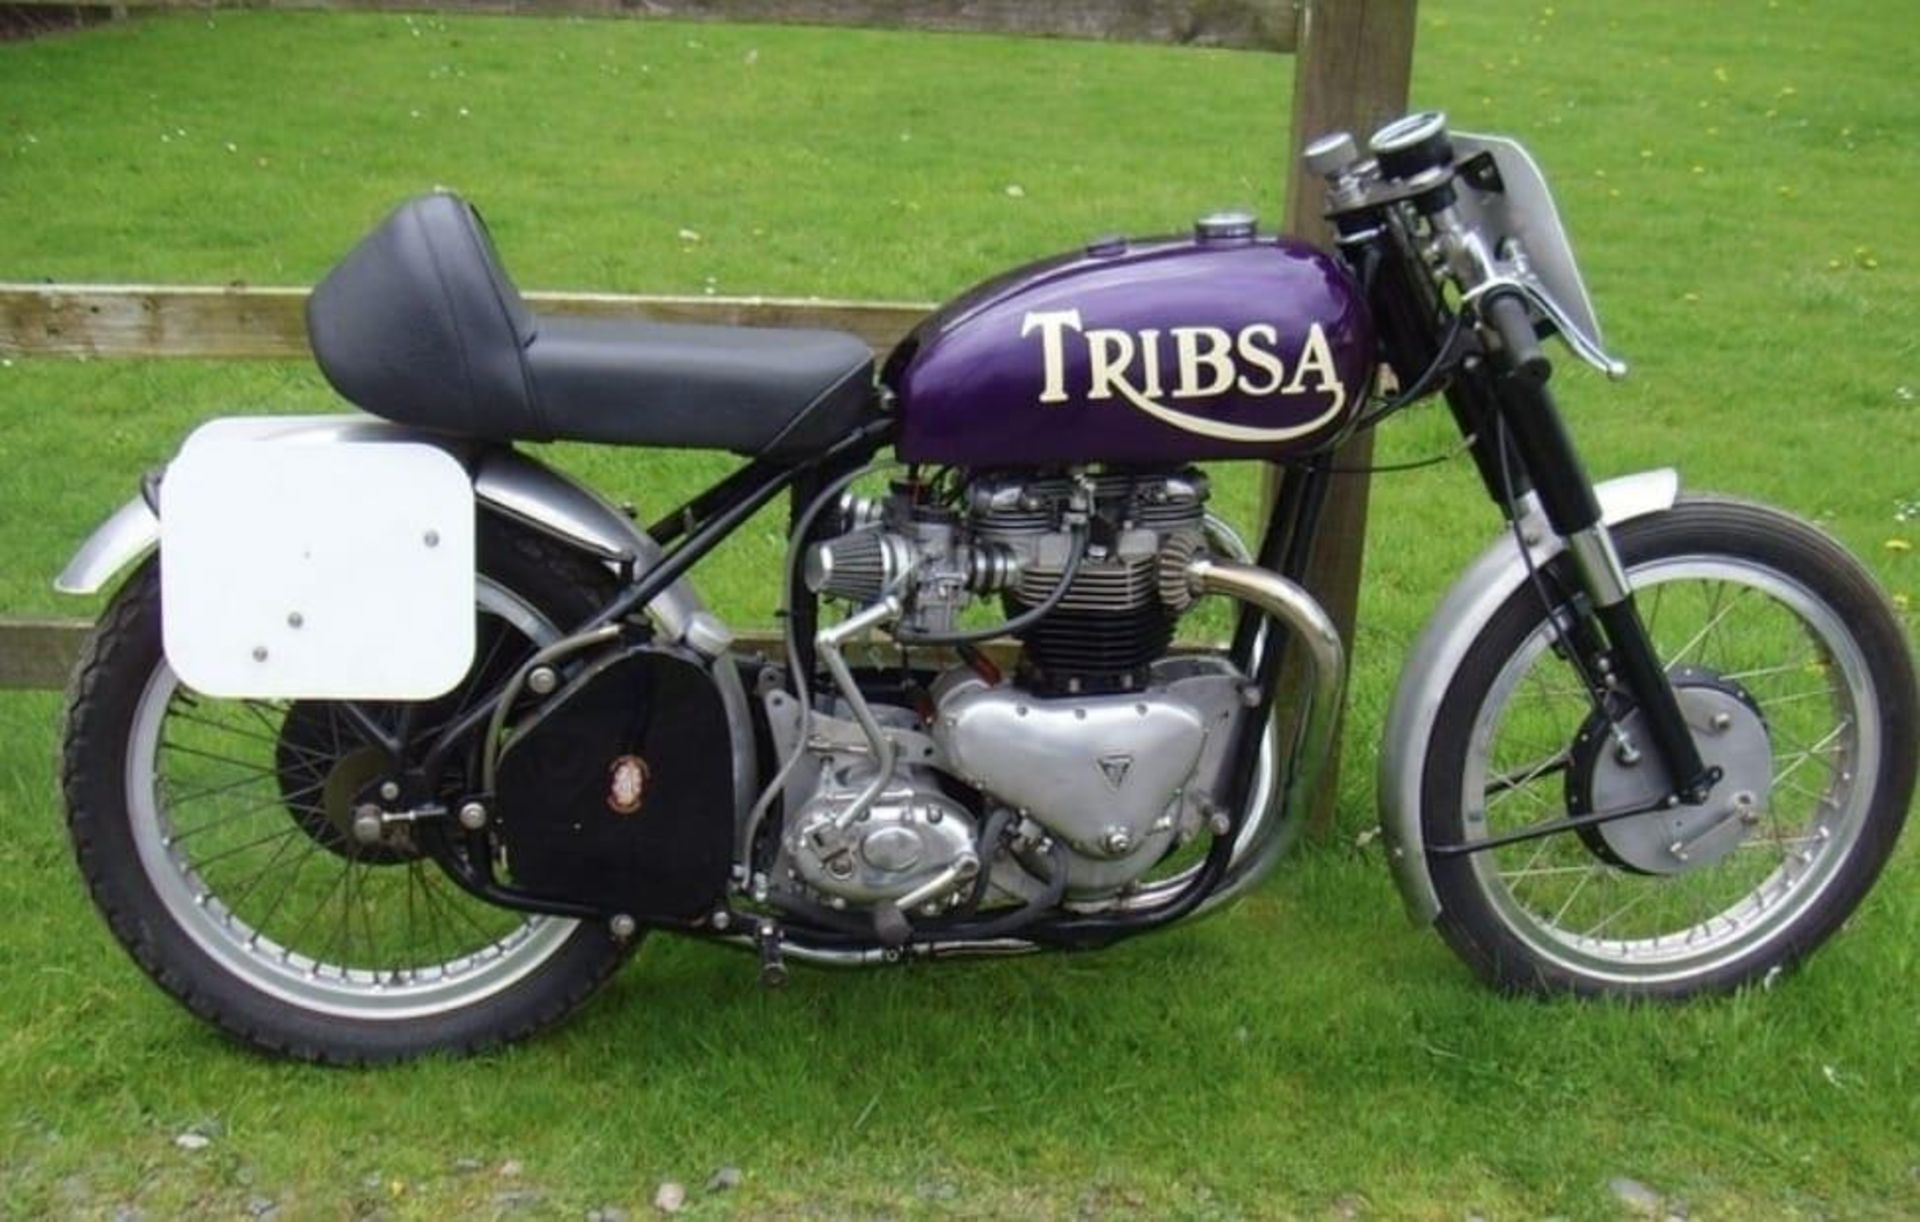 Tribsa T120/Daytona Goldstar Rigid 750 motorcycle. One of 3 Mead and Tomkinson Daytona Goldstar